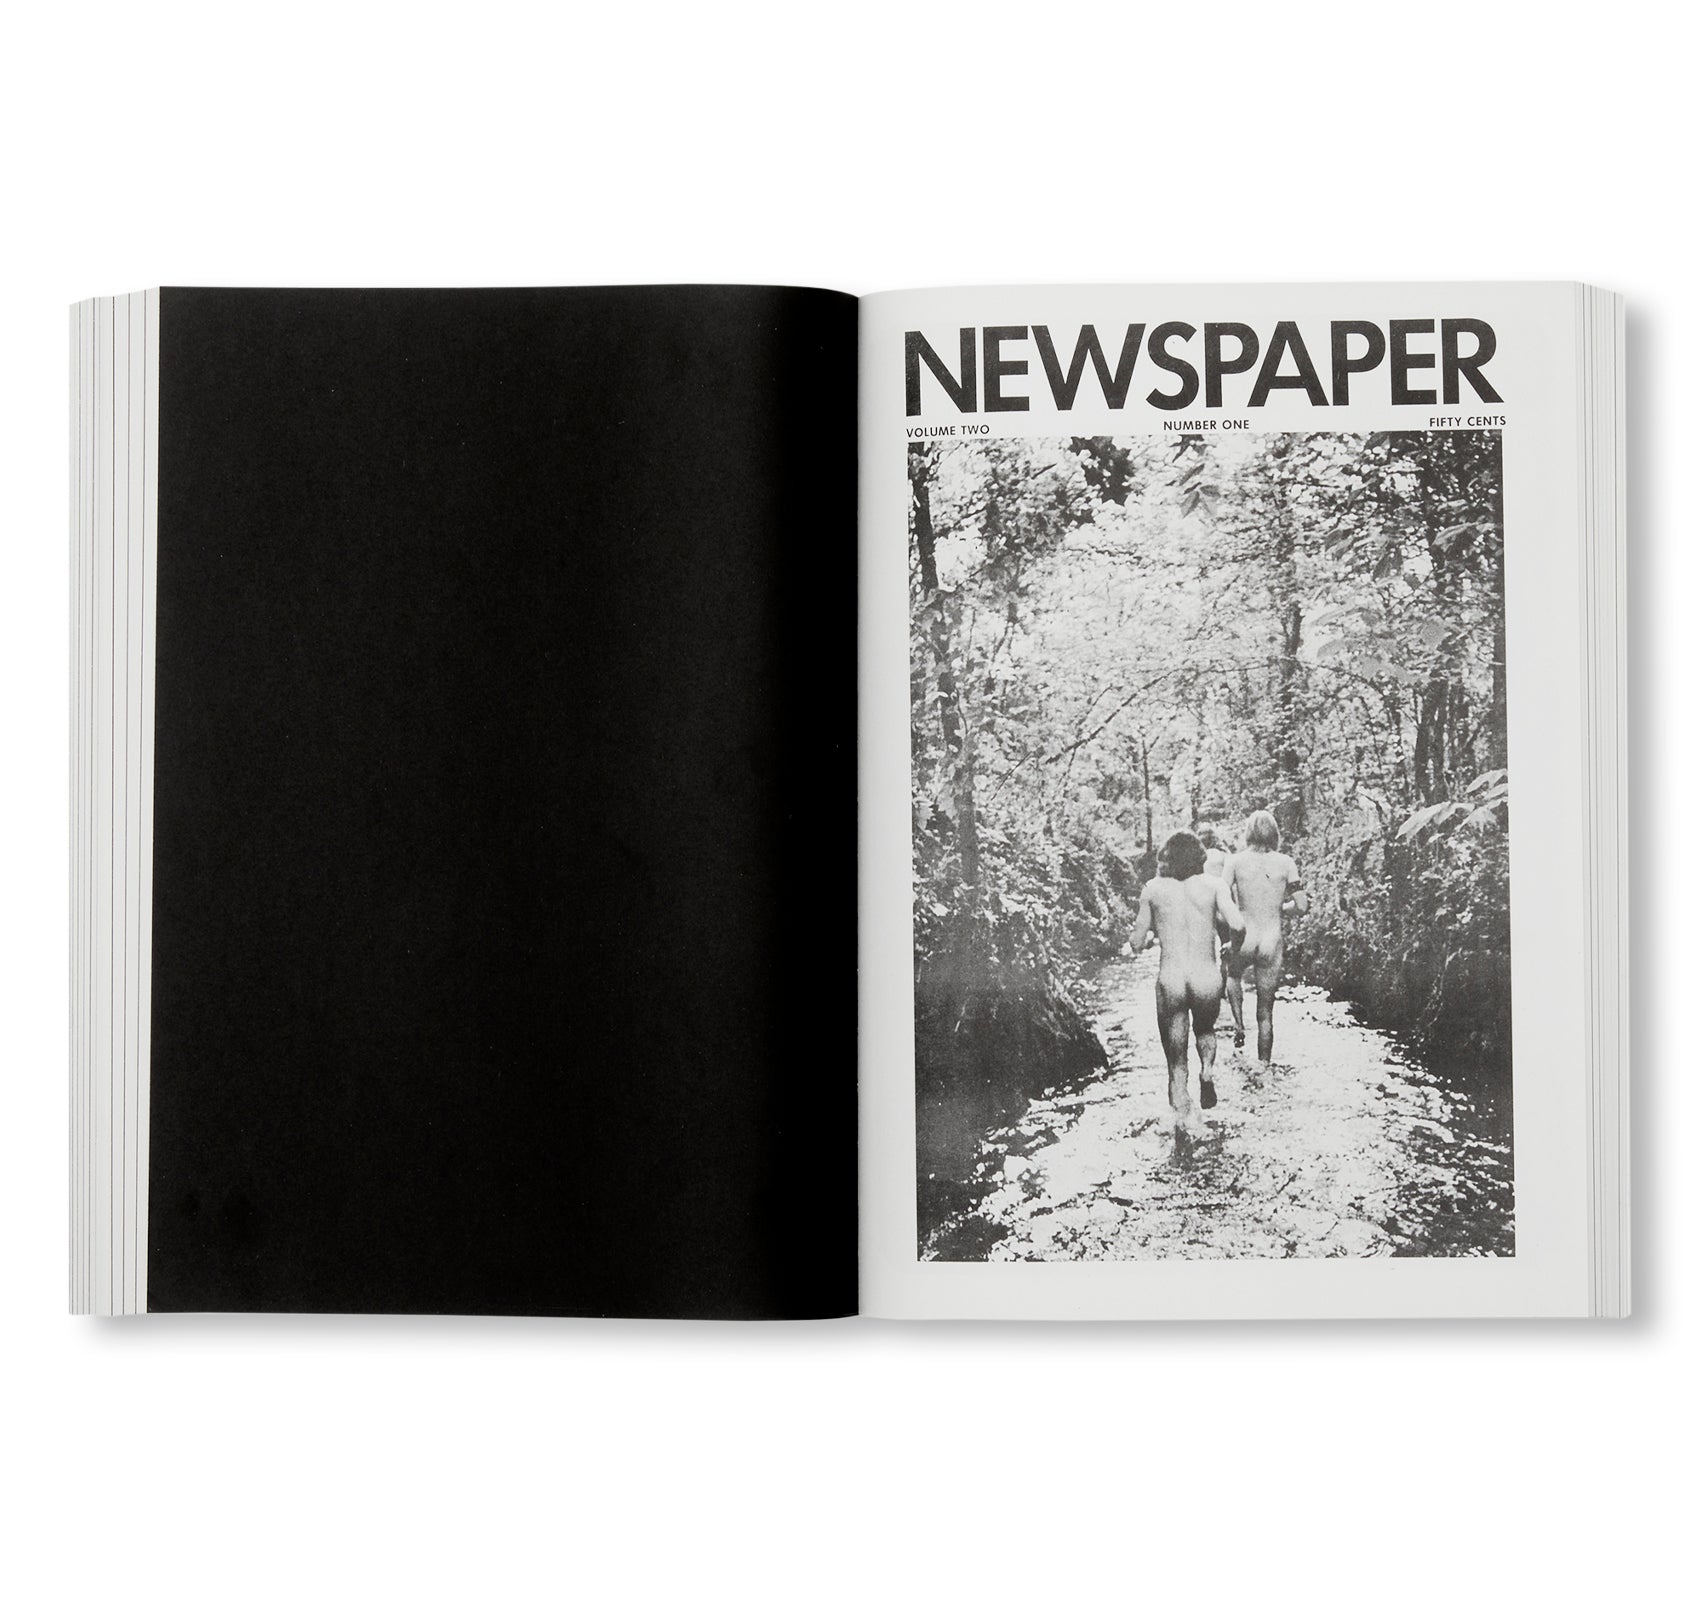 NEWSPAPER by Steve Lawrence, Peter Hujar, Andrew Ullrick